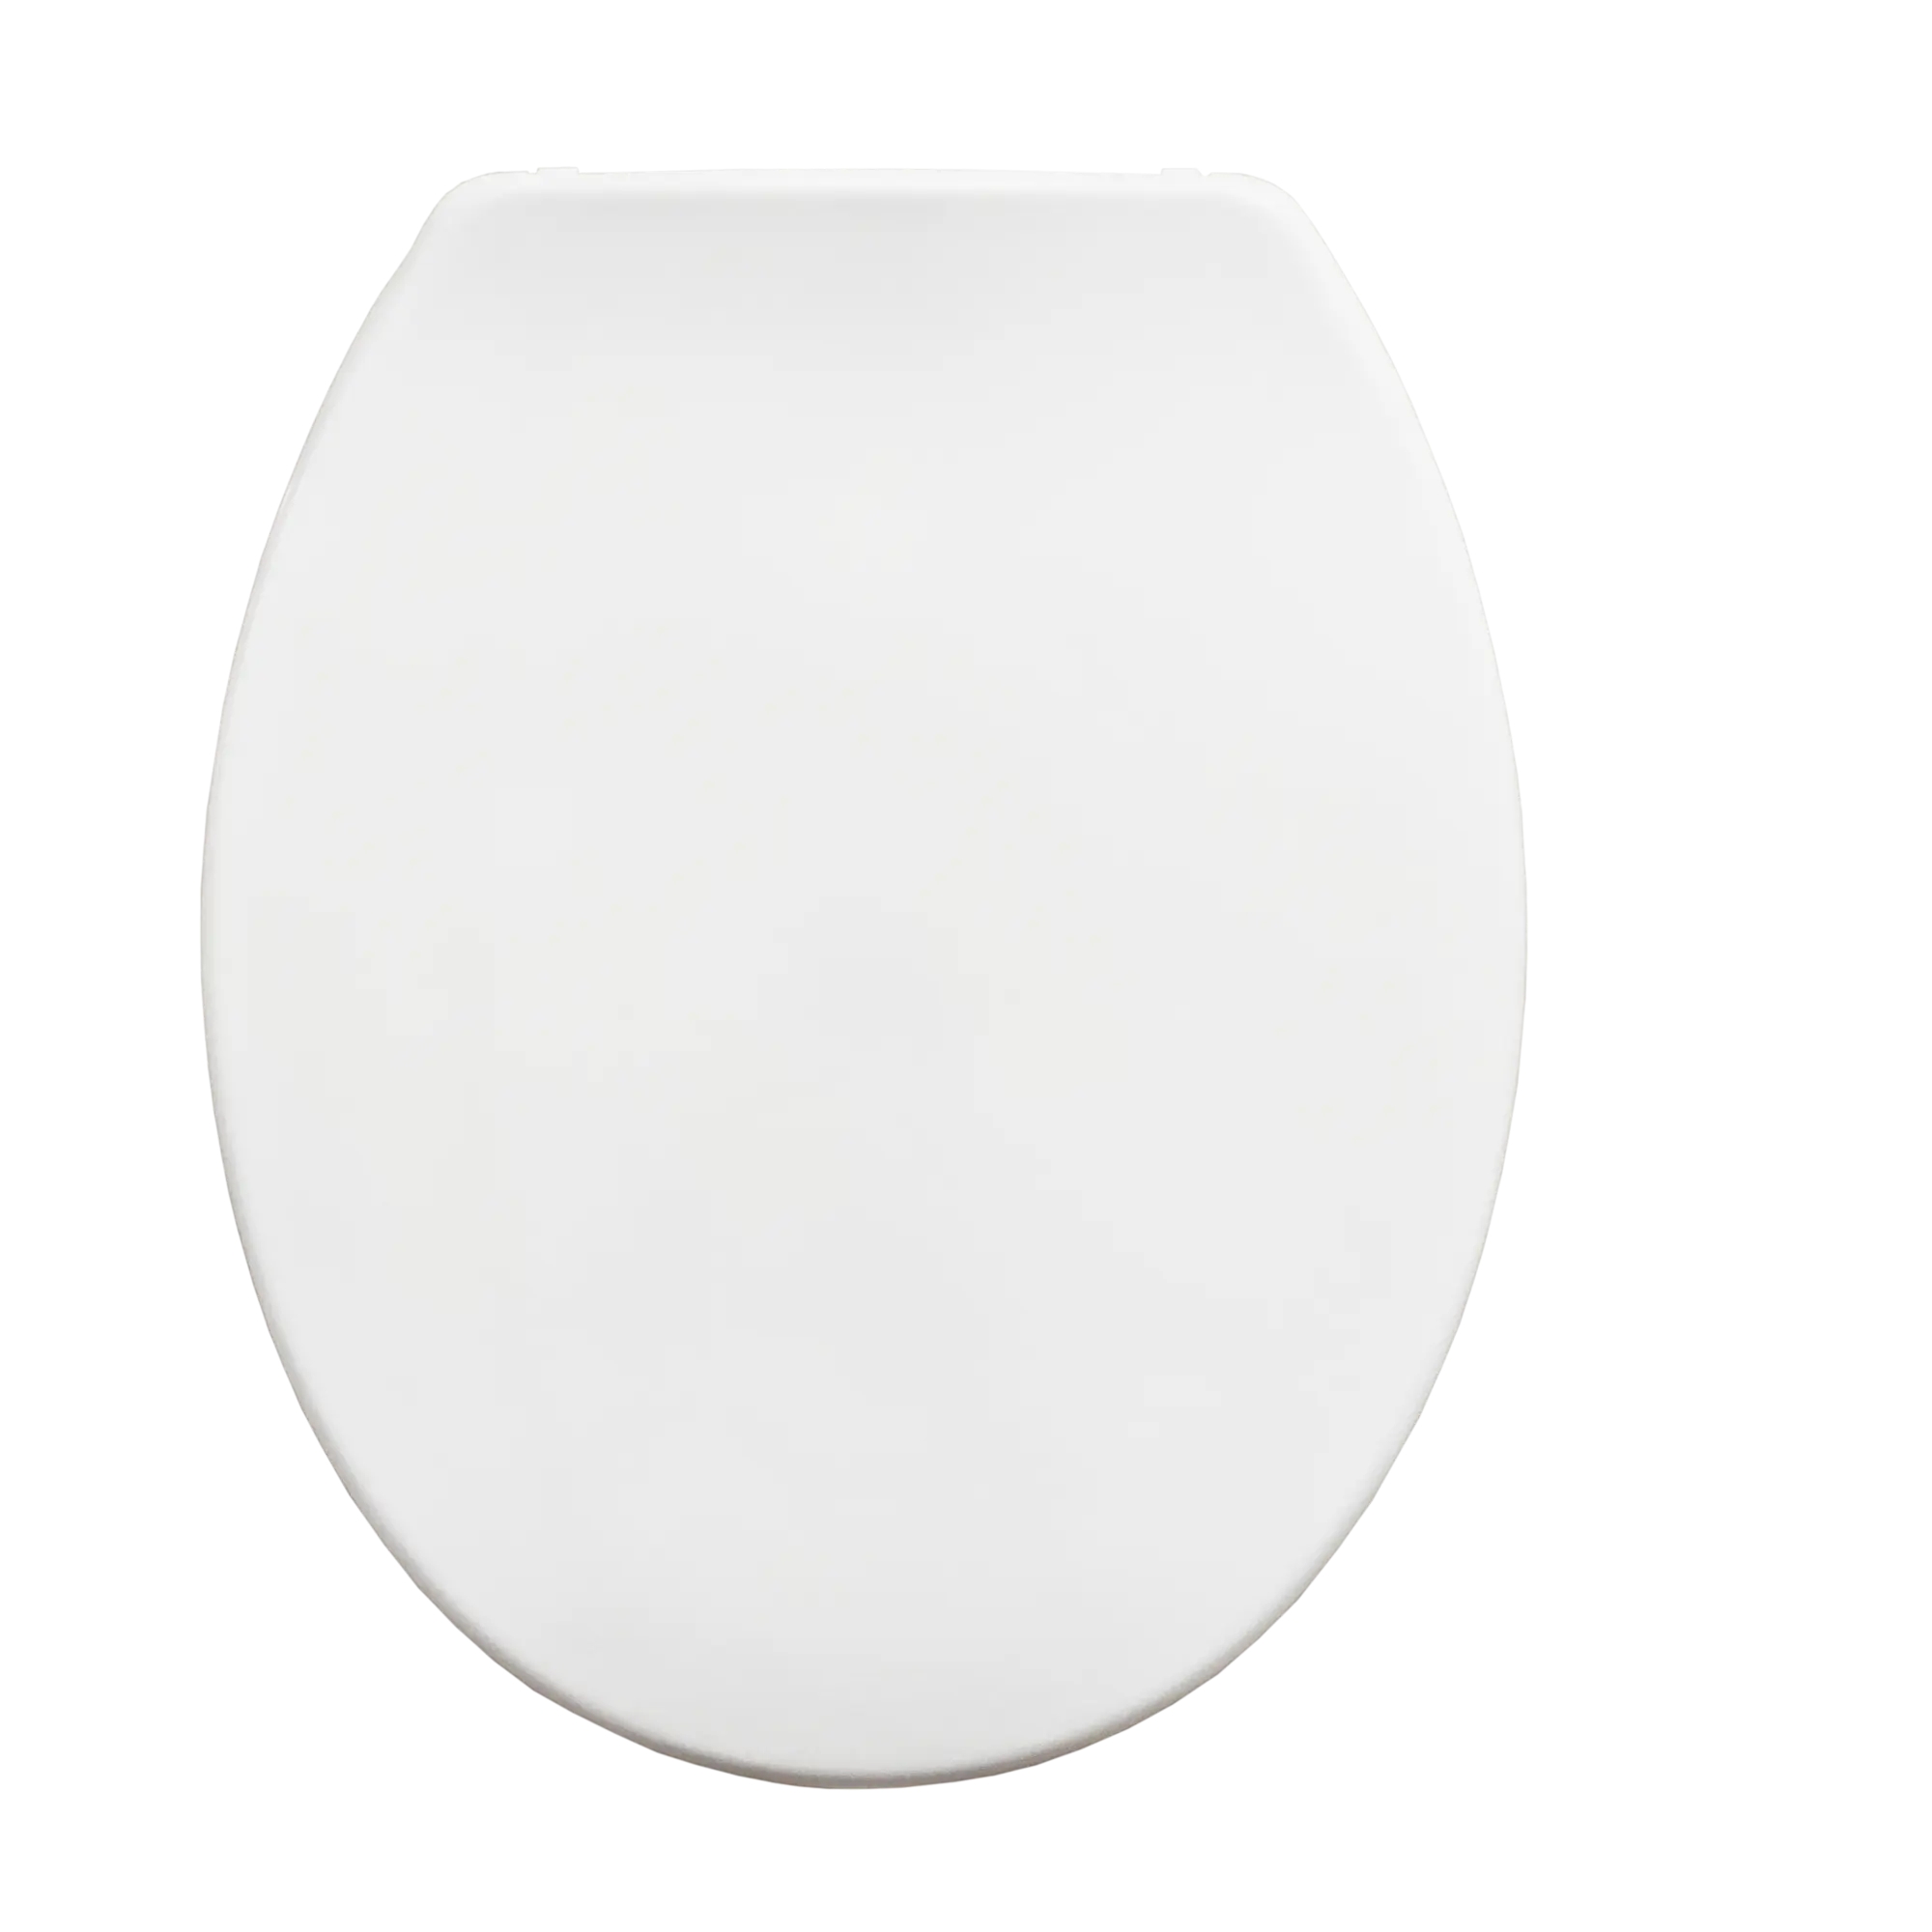 Copriwater ovale Universale Easy SENSEA duroplast bianco - 1